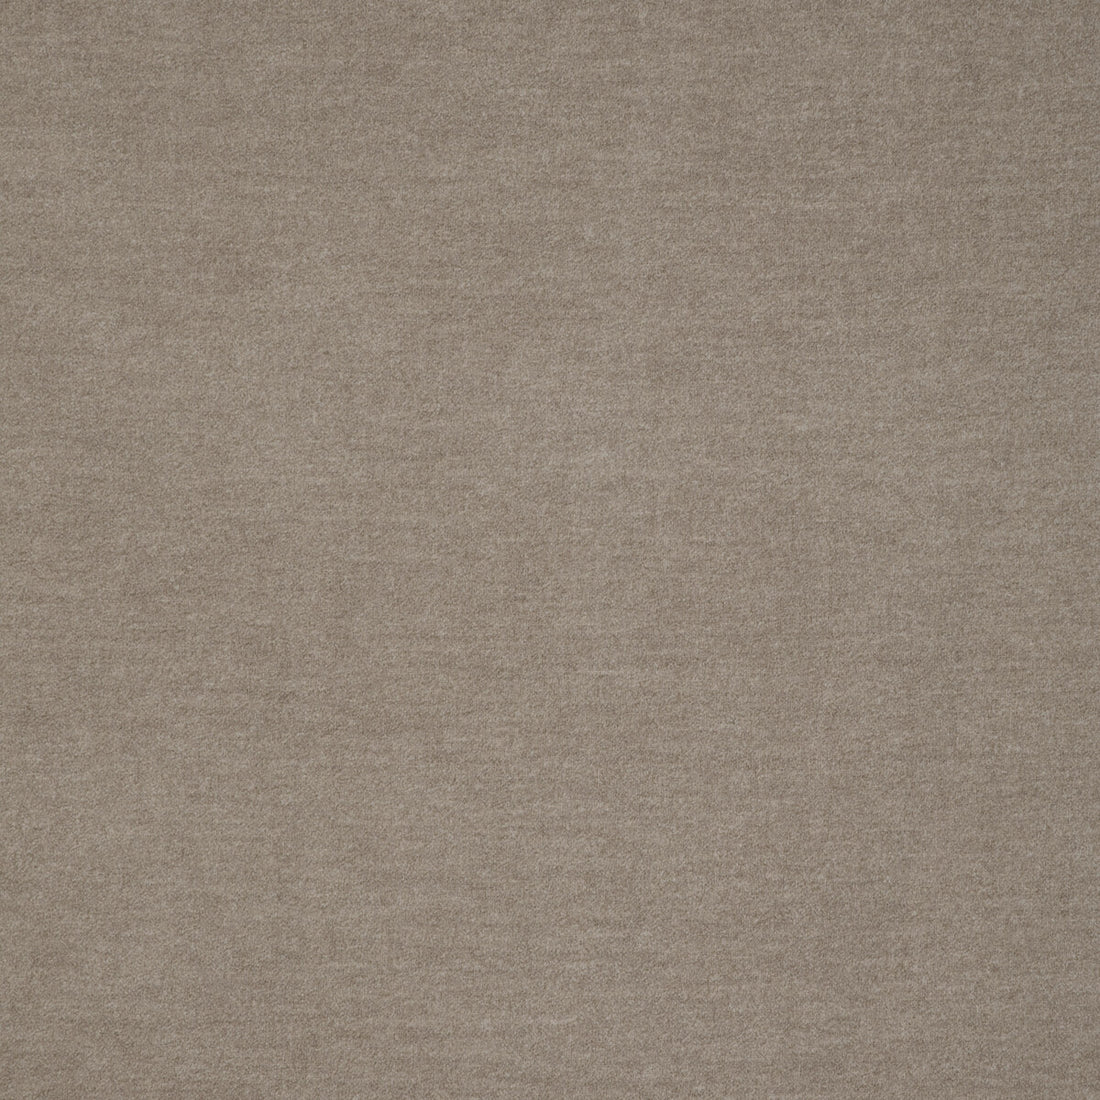 Kravet Smart fabric in 37000-106 color - pattern 37000.106.0 - by Kravet Smart in the Performance Kravetarmor collection